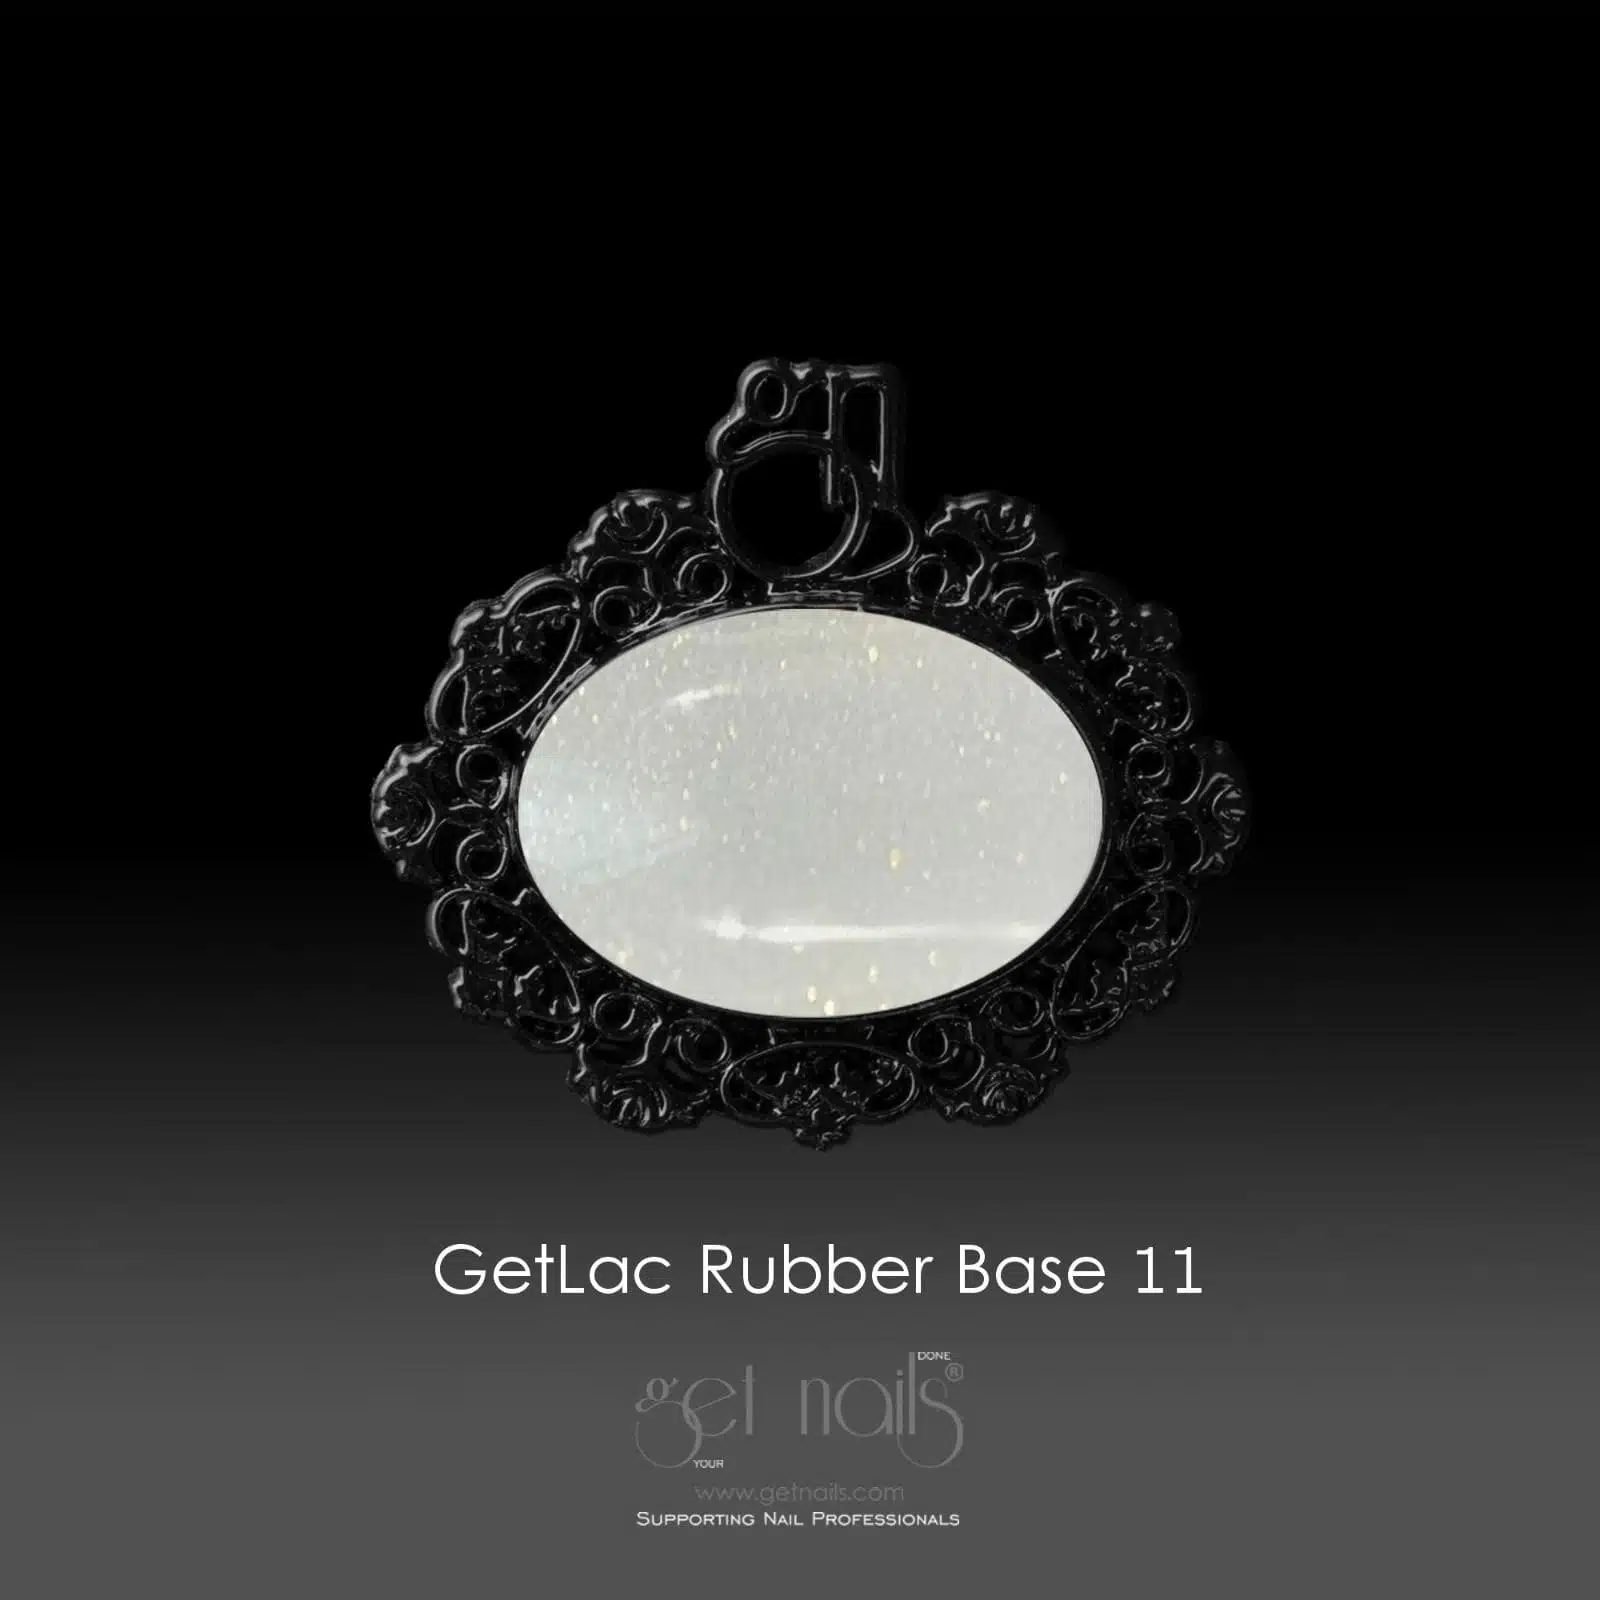 Get Nails Austria - GetLac Rubber Base 11 15g